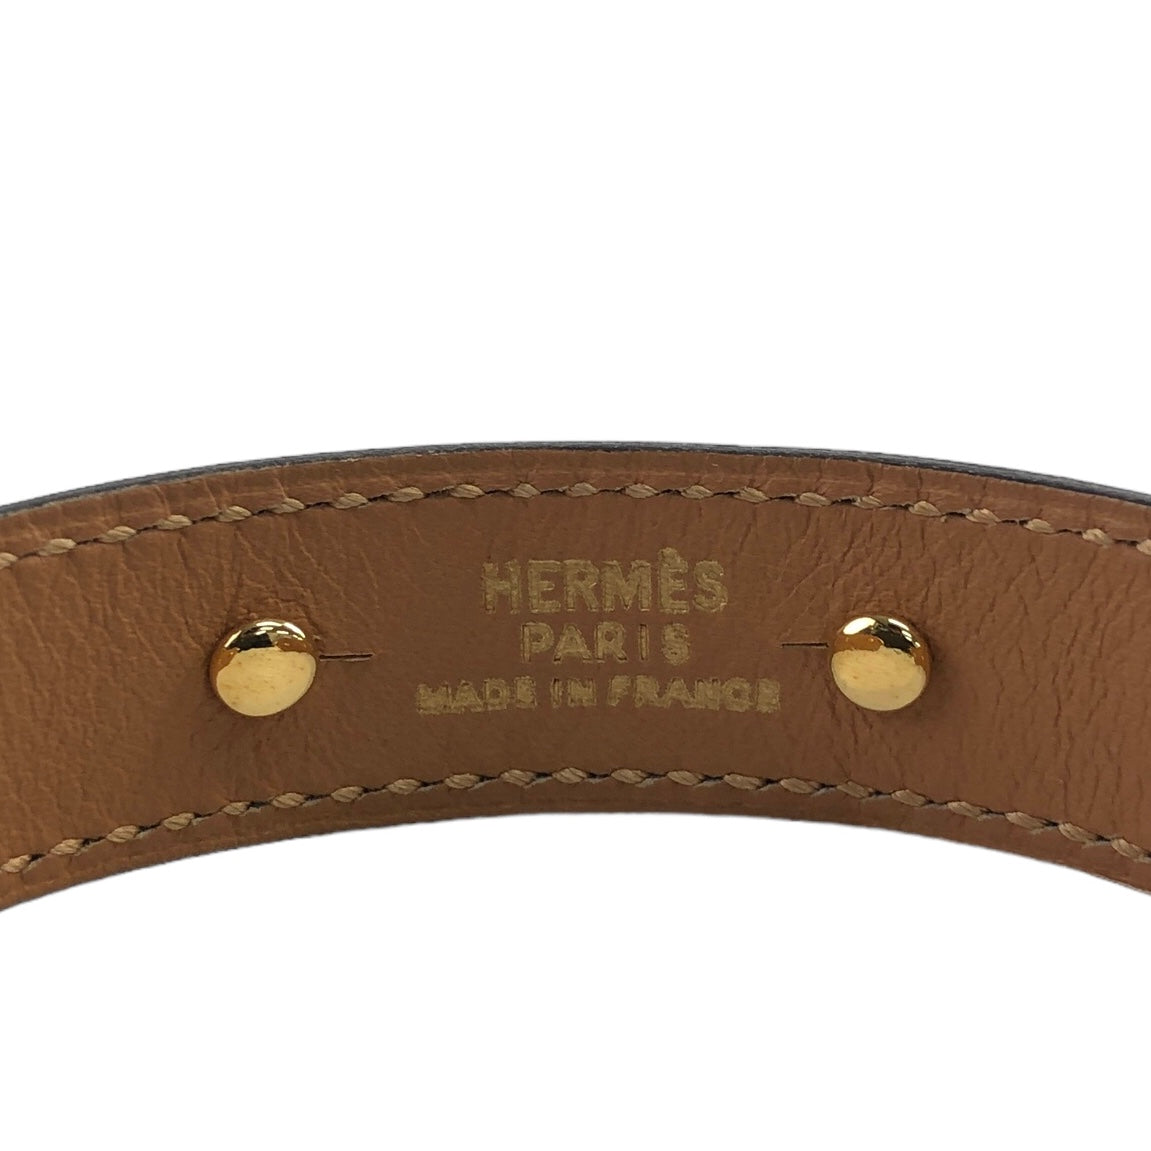 HERMES Chaine d'ancre Leather Bangle Black×Gold Vintage i5kvpf